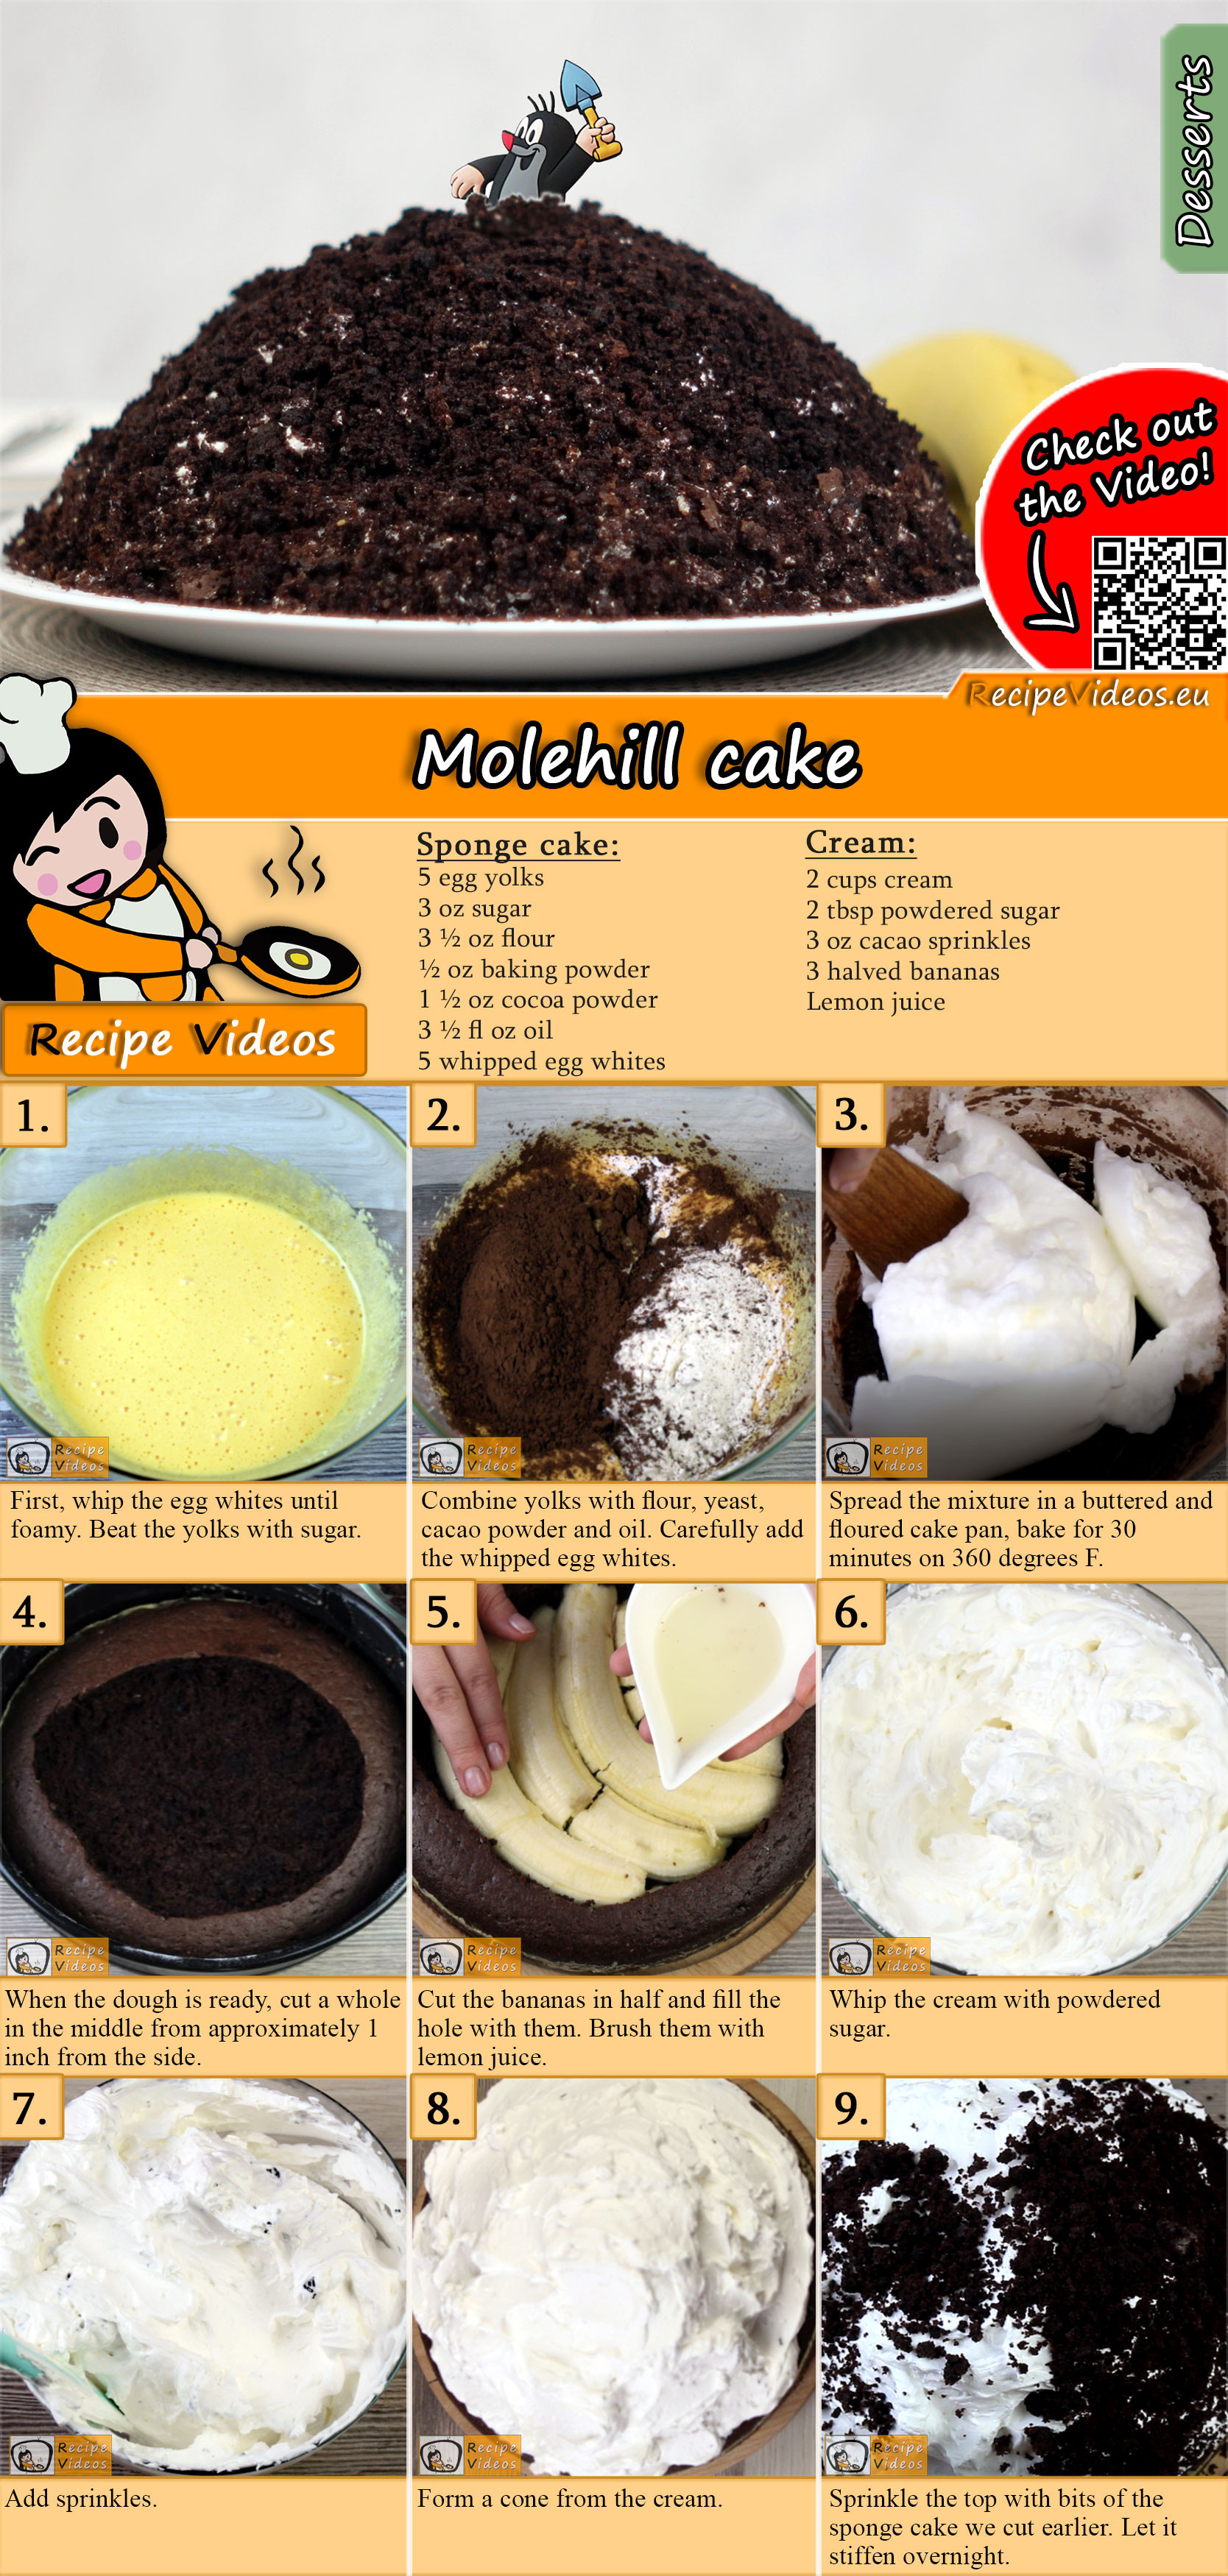 Molehill cake recipe with video